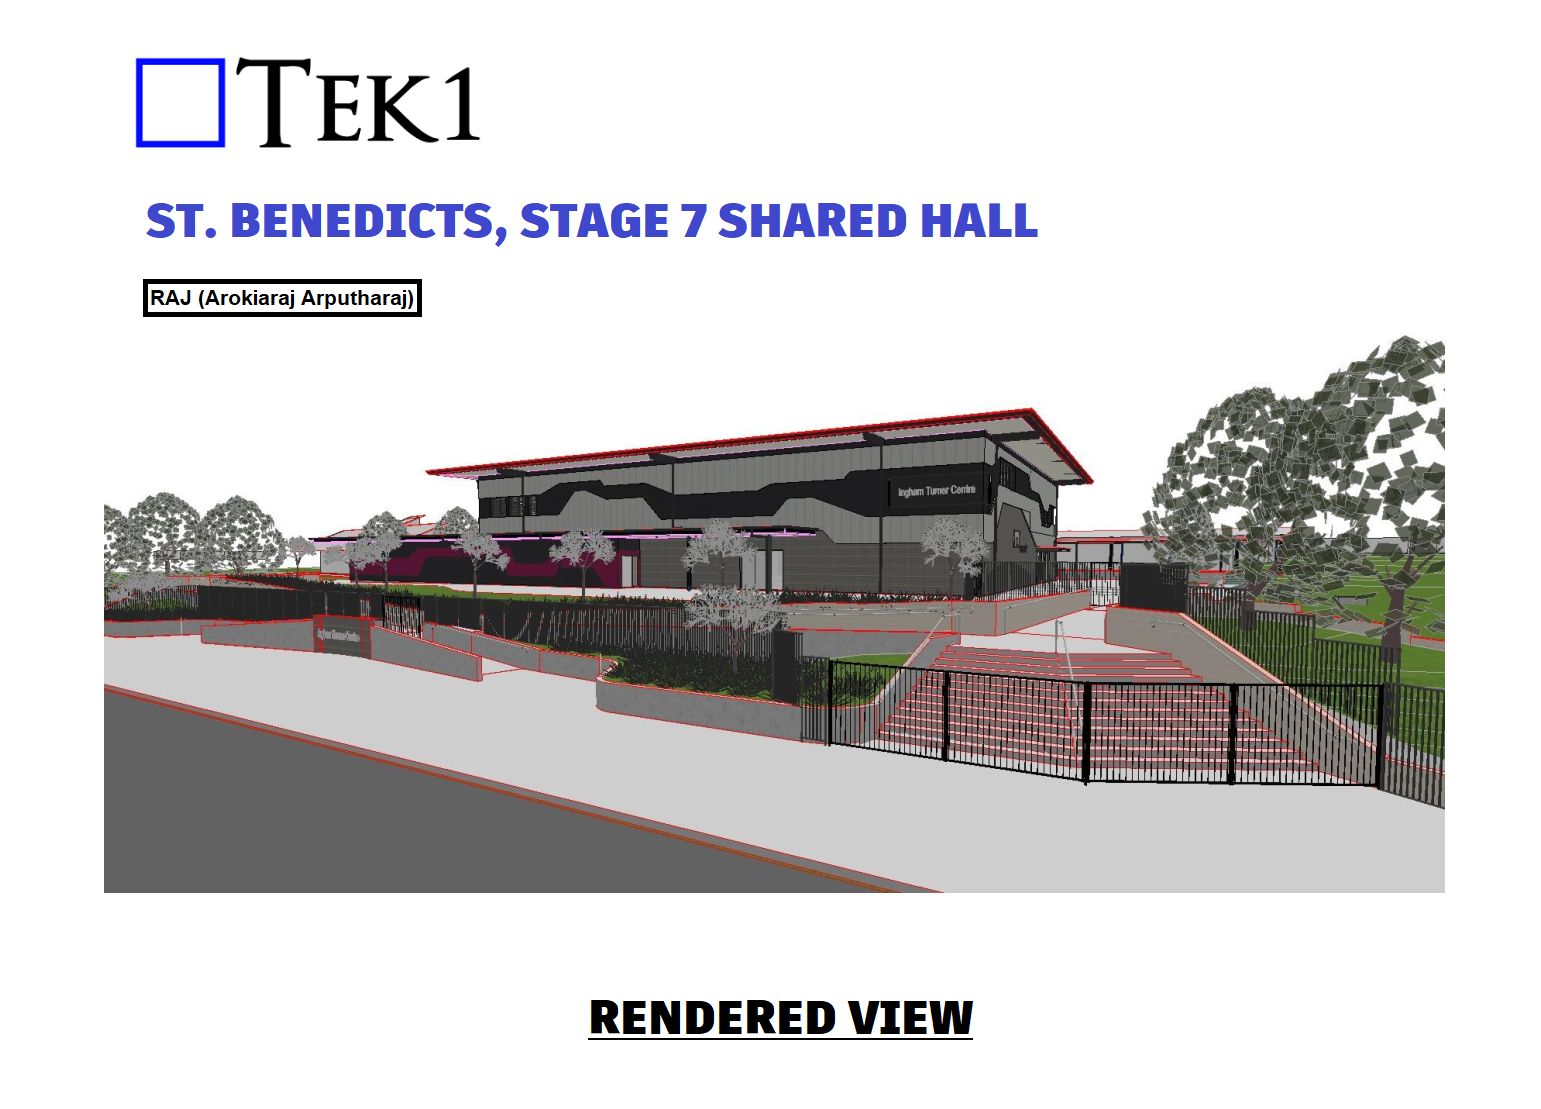 St. Benedict’s Stage 7 Hall, Oran Park